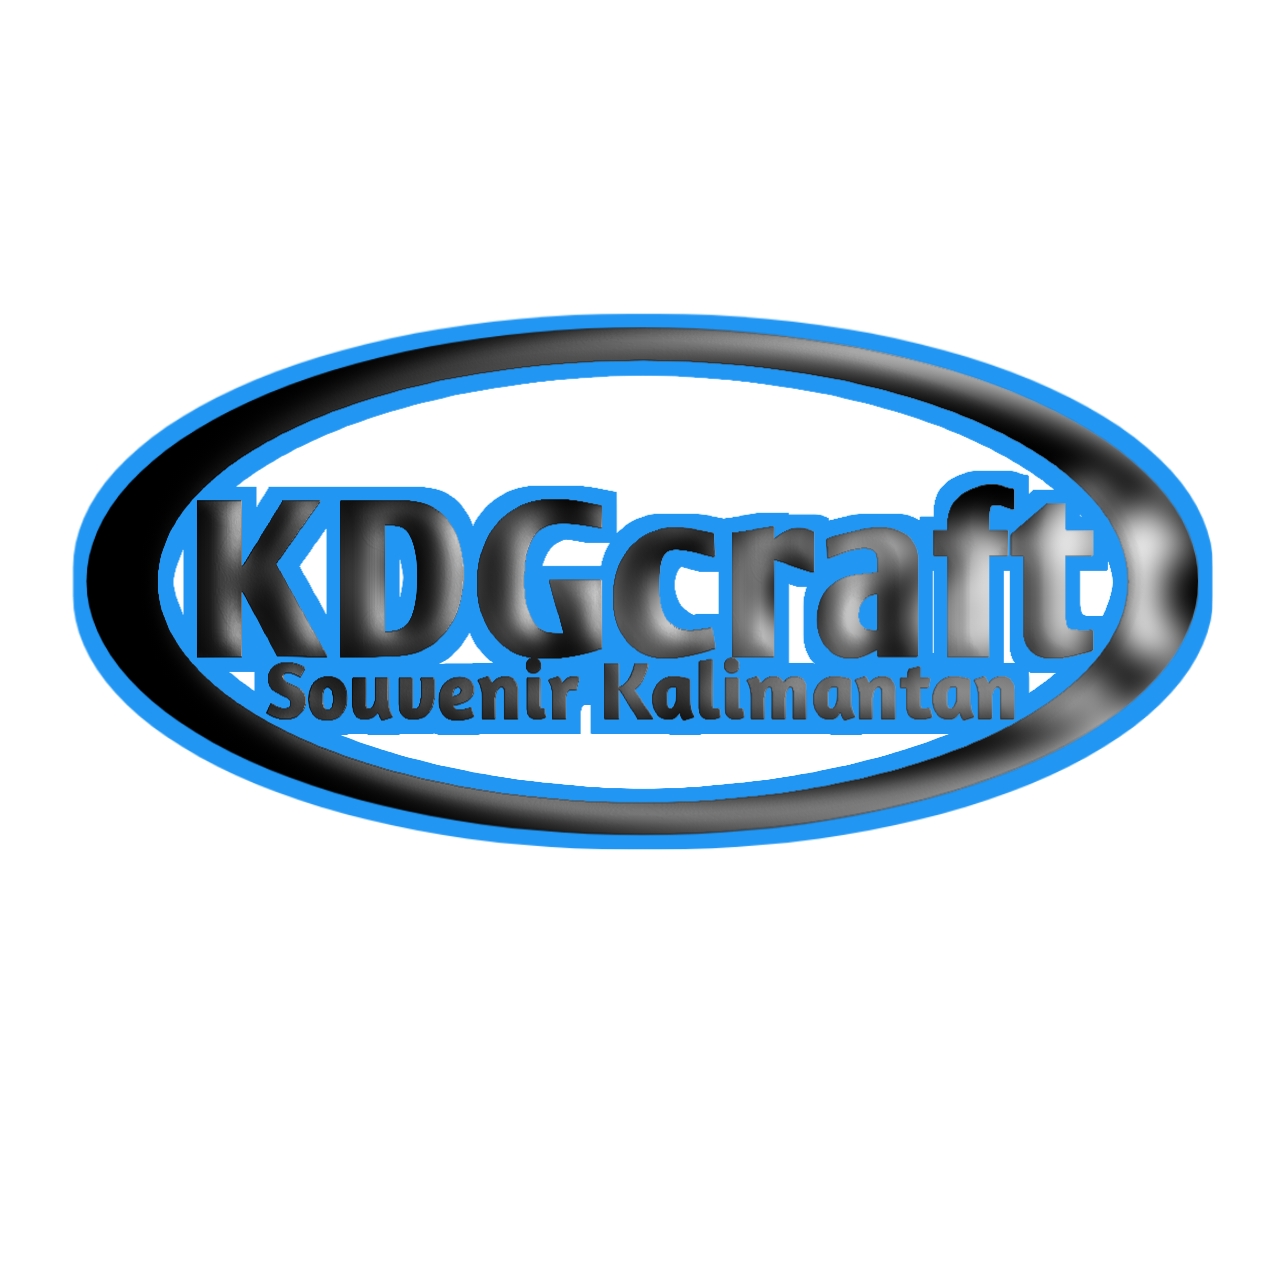 Kdg_Craft